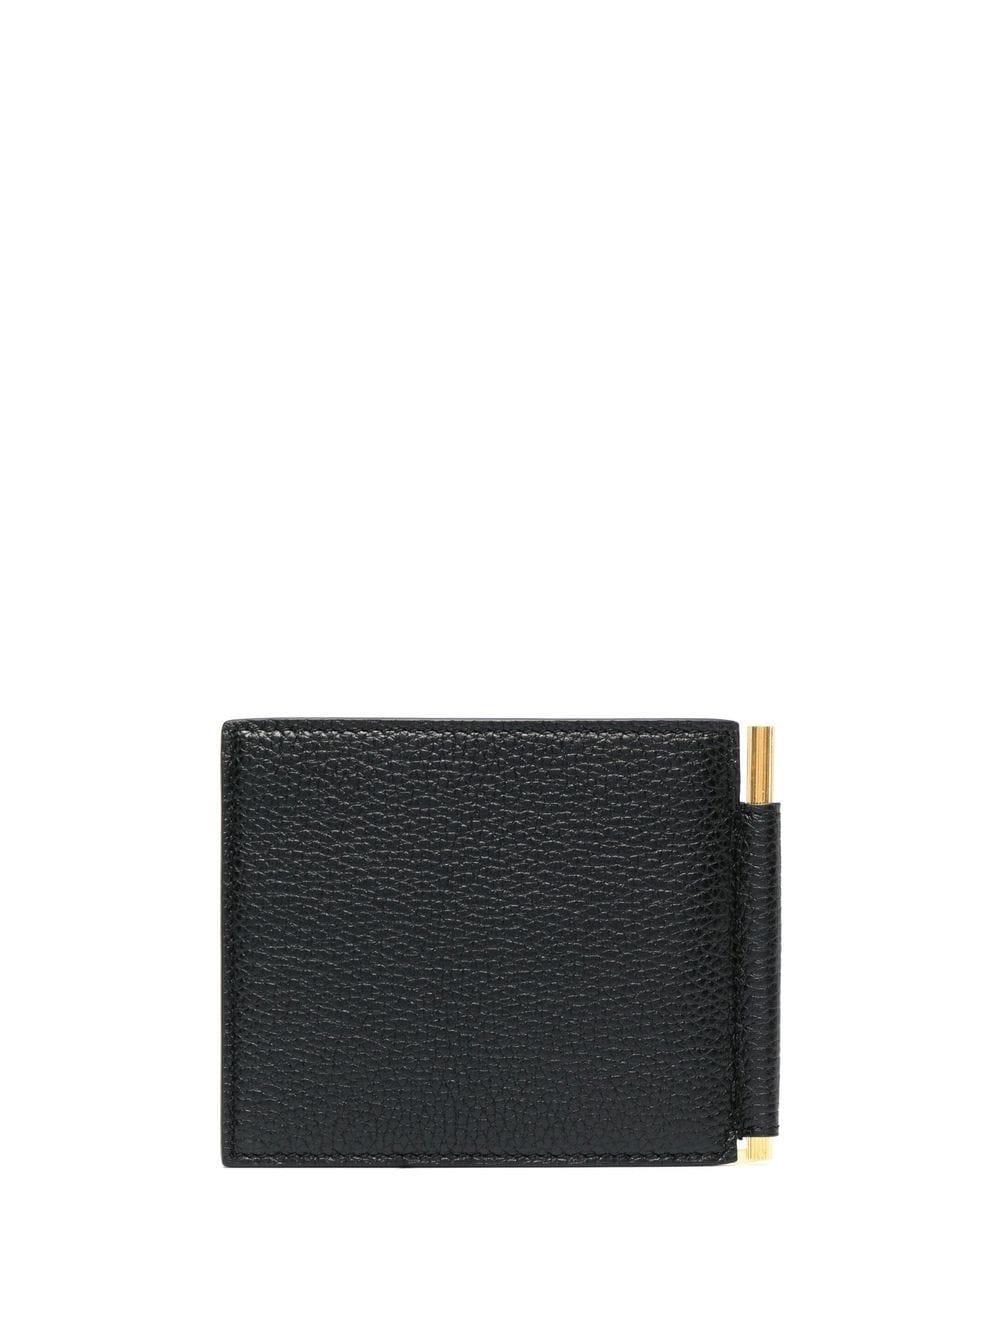 TOM FORD money clip leather wallet - Black